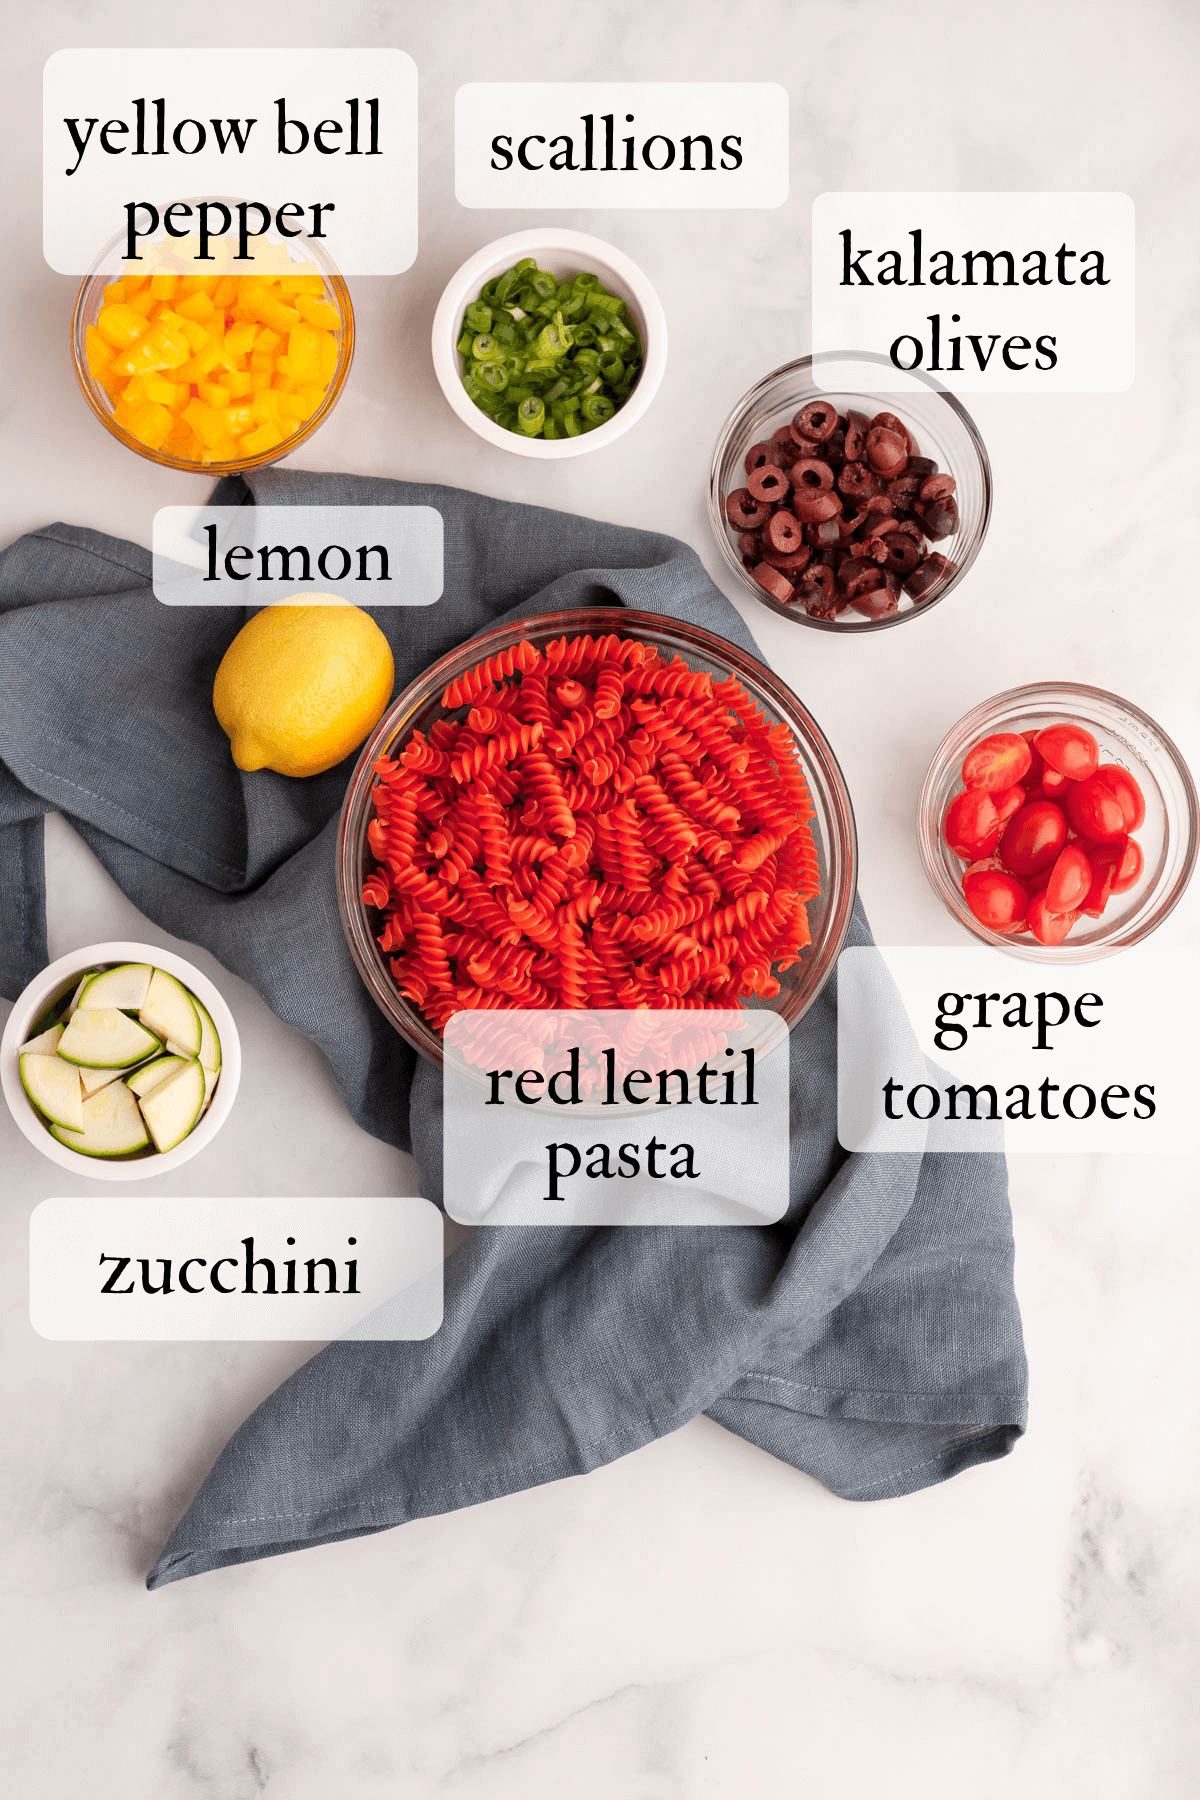 red lentil pasta salad dry ingredients overhead image